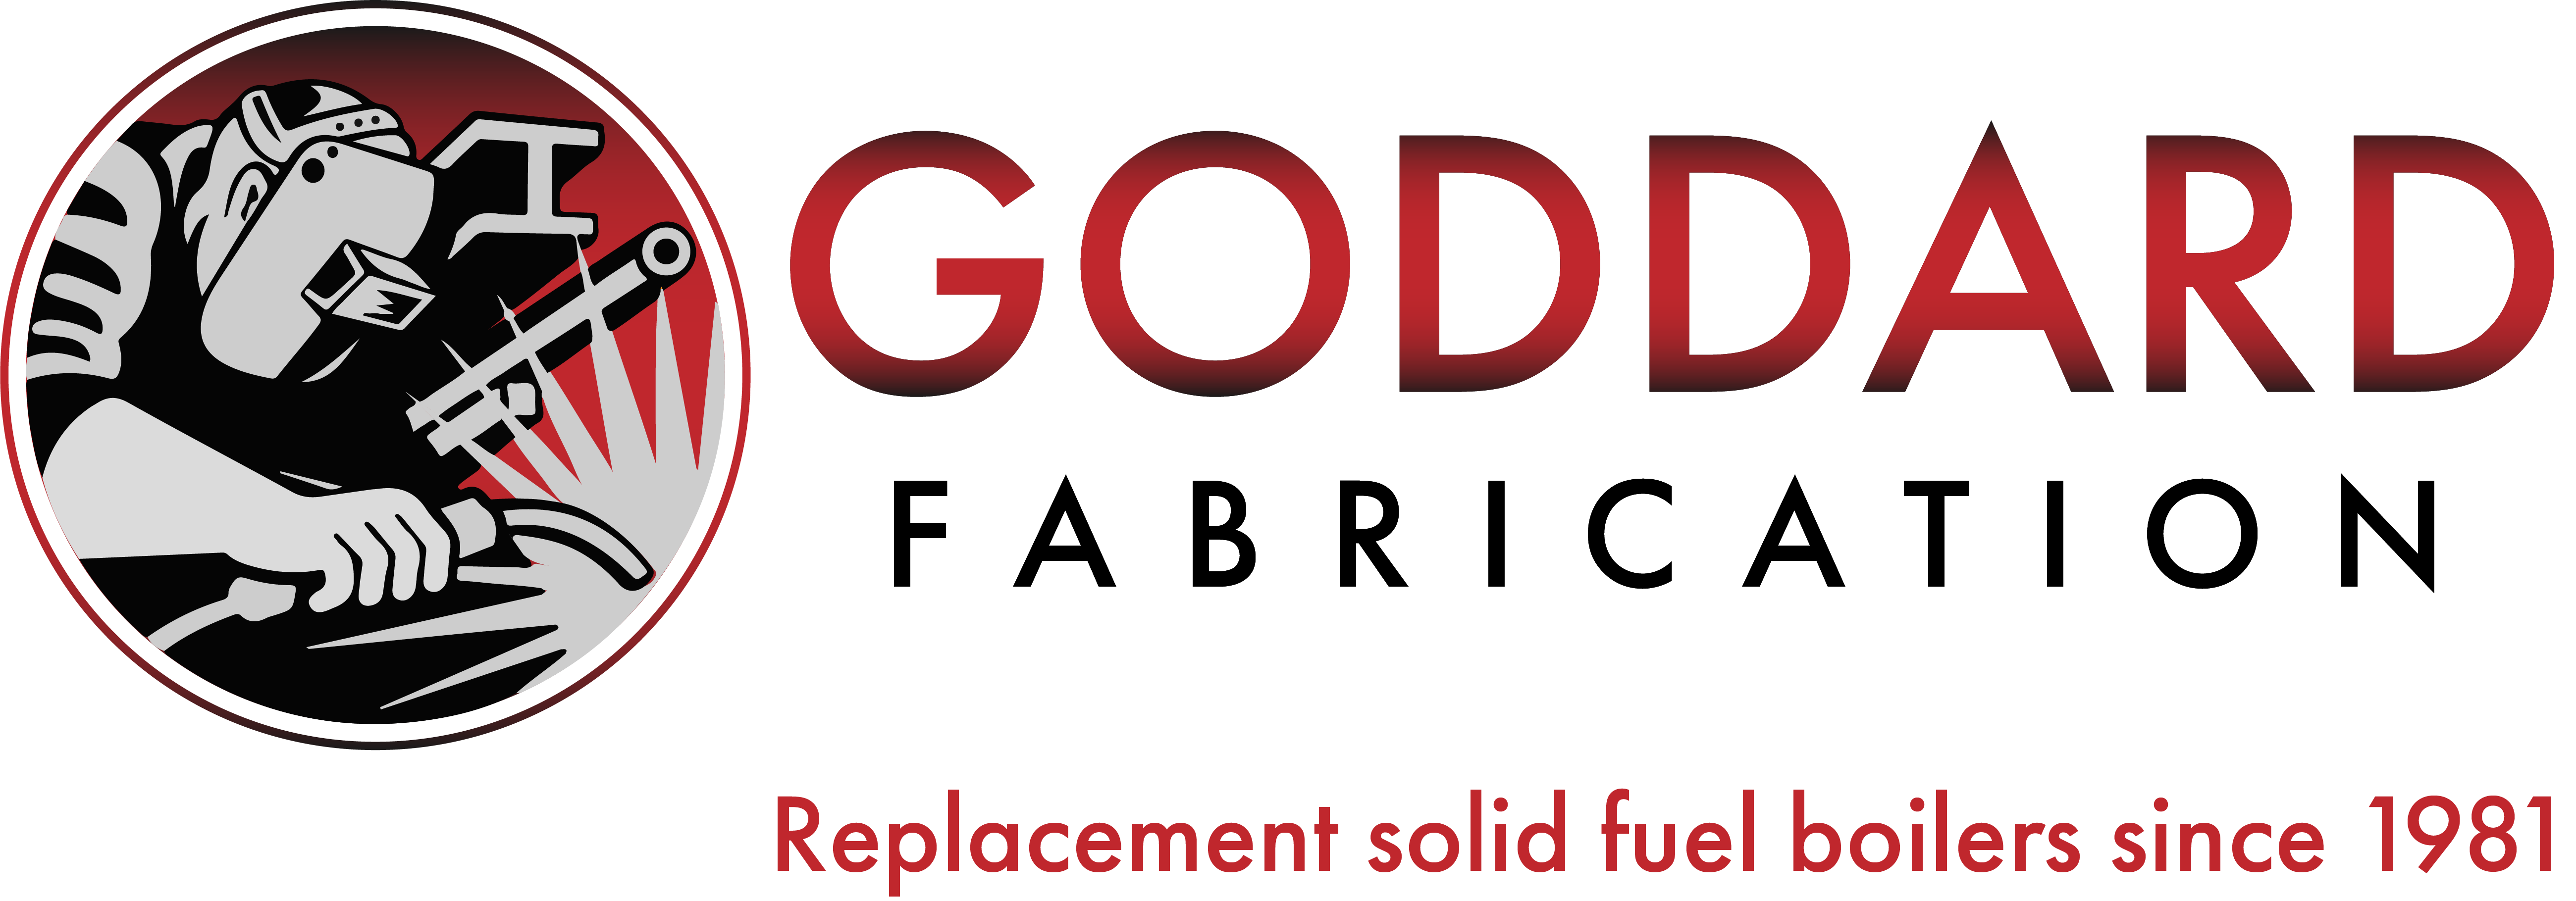 Goddard Fabrication Logo